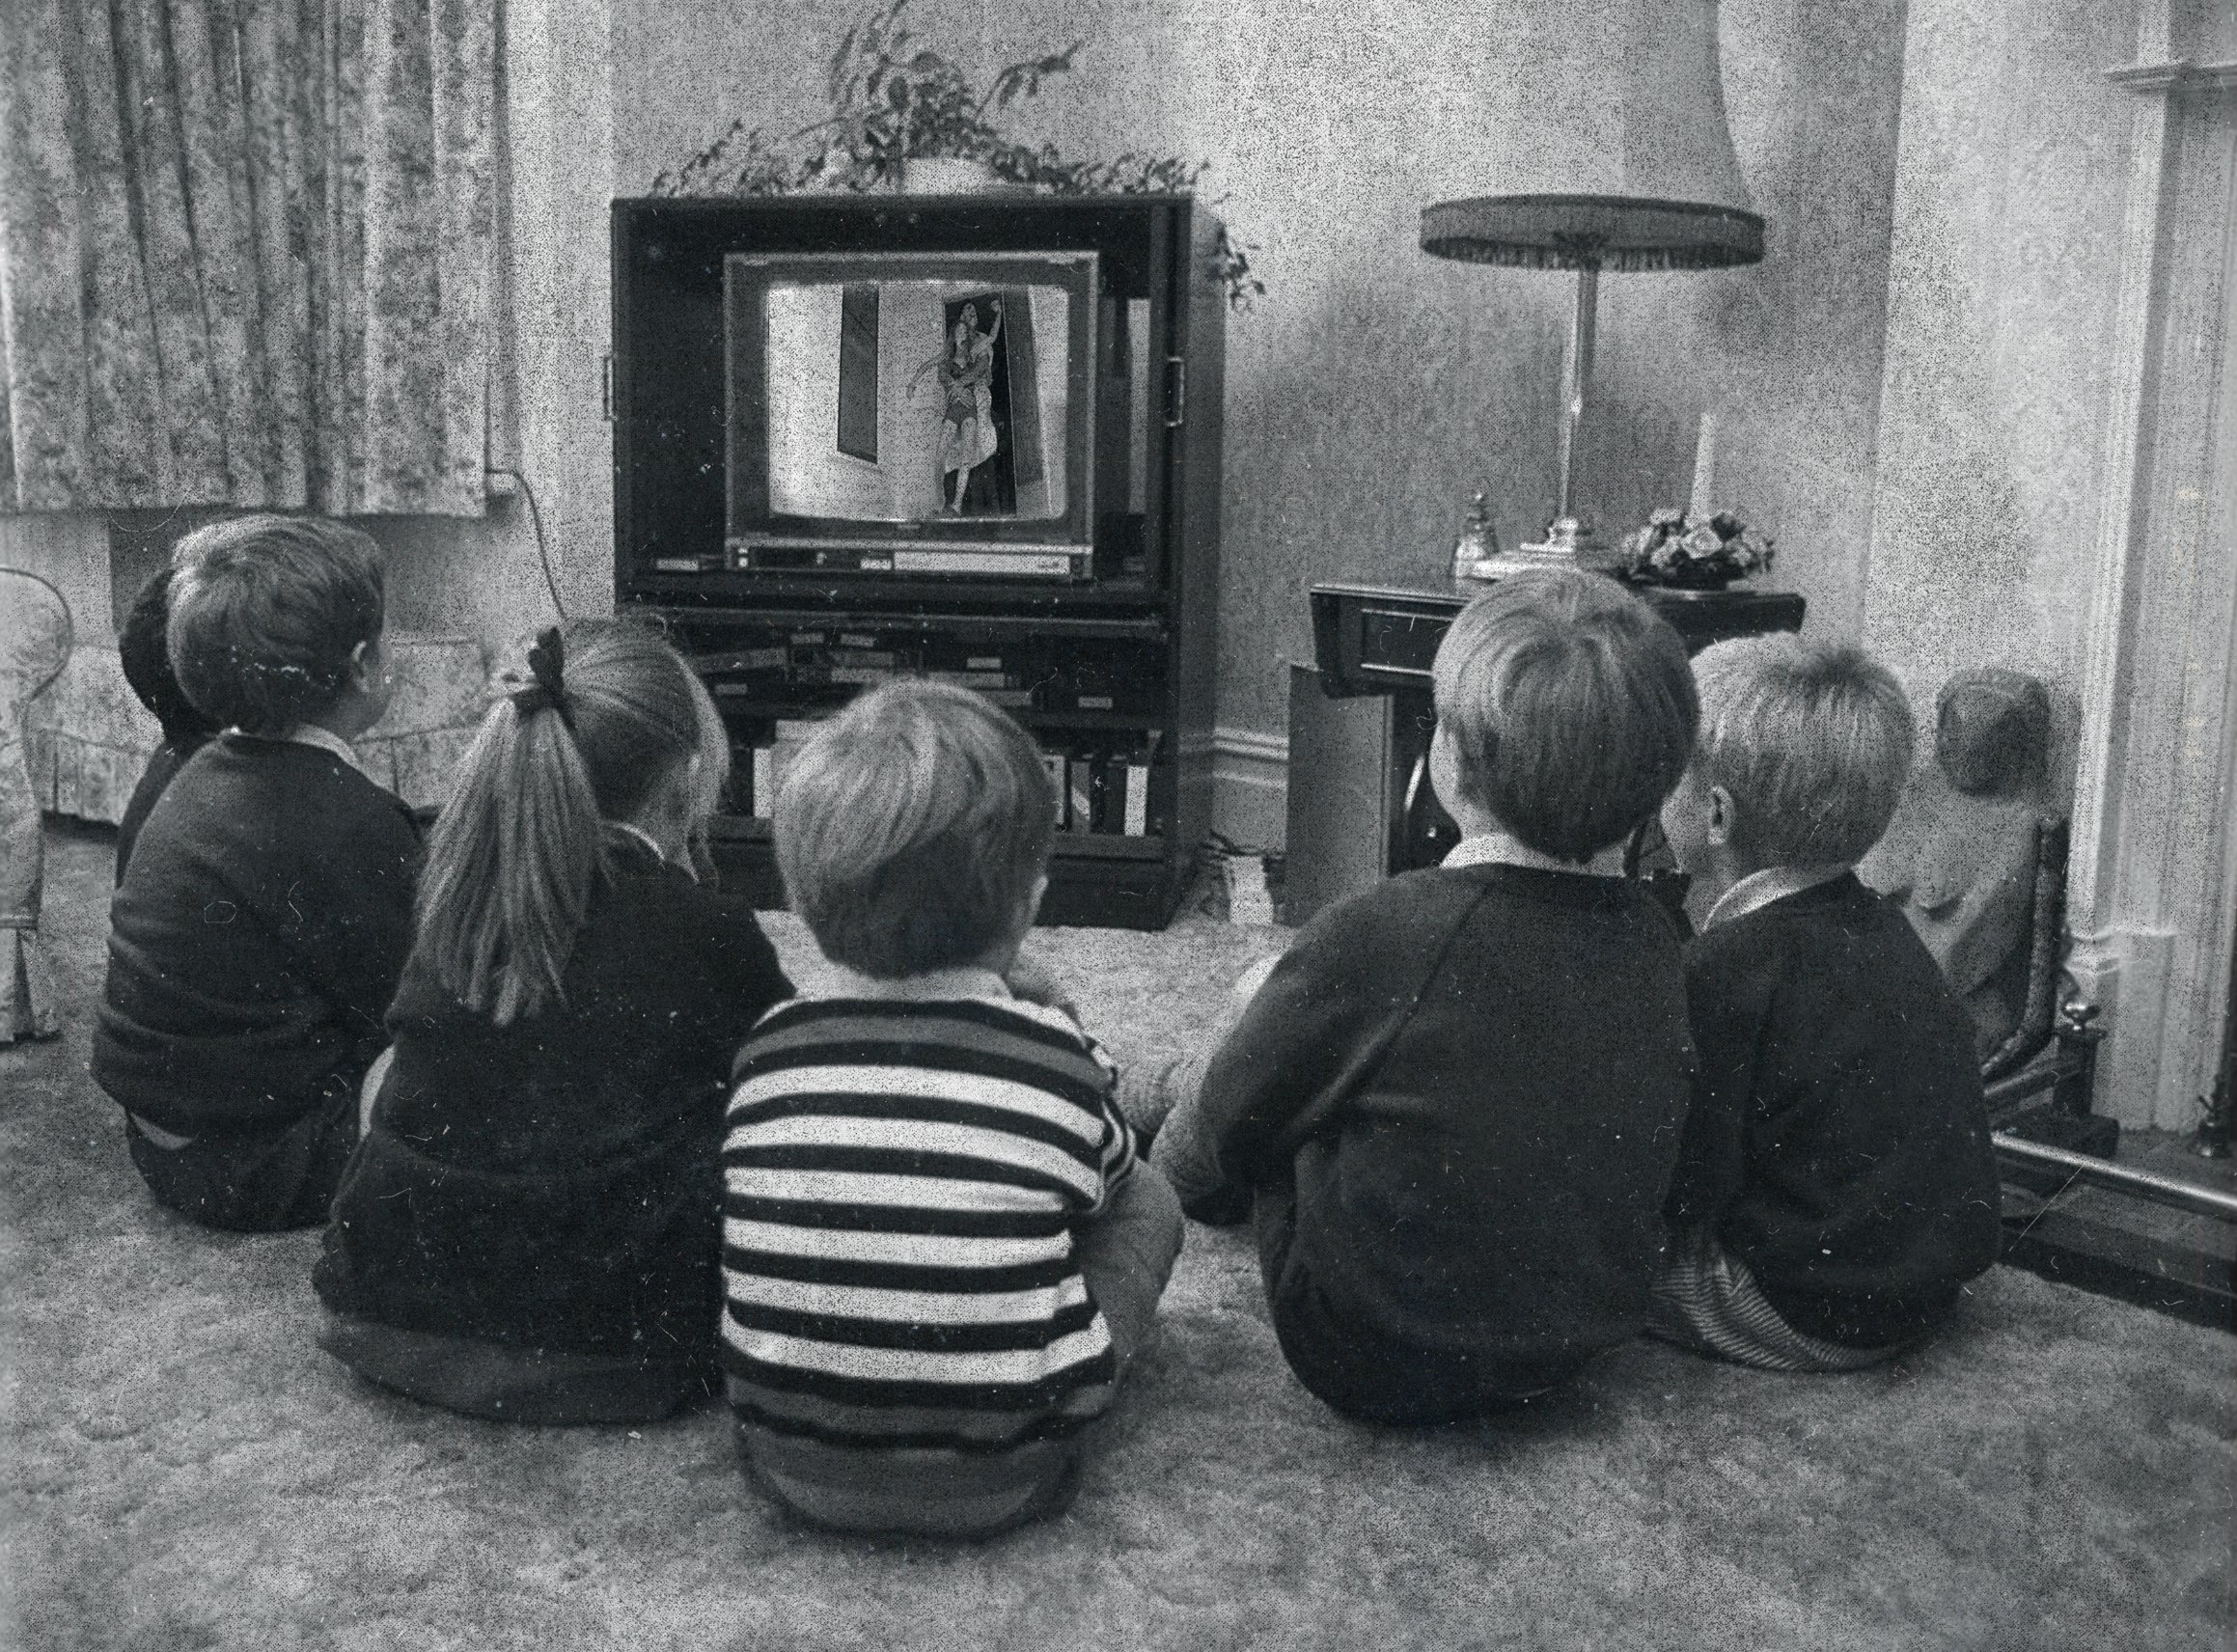 Photoshopping Leatherface - old black and white tv